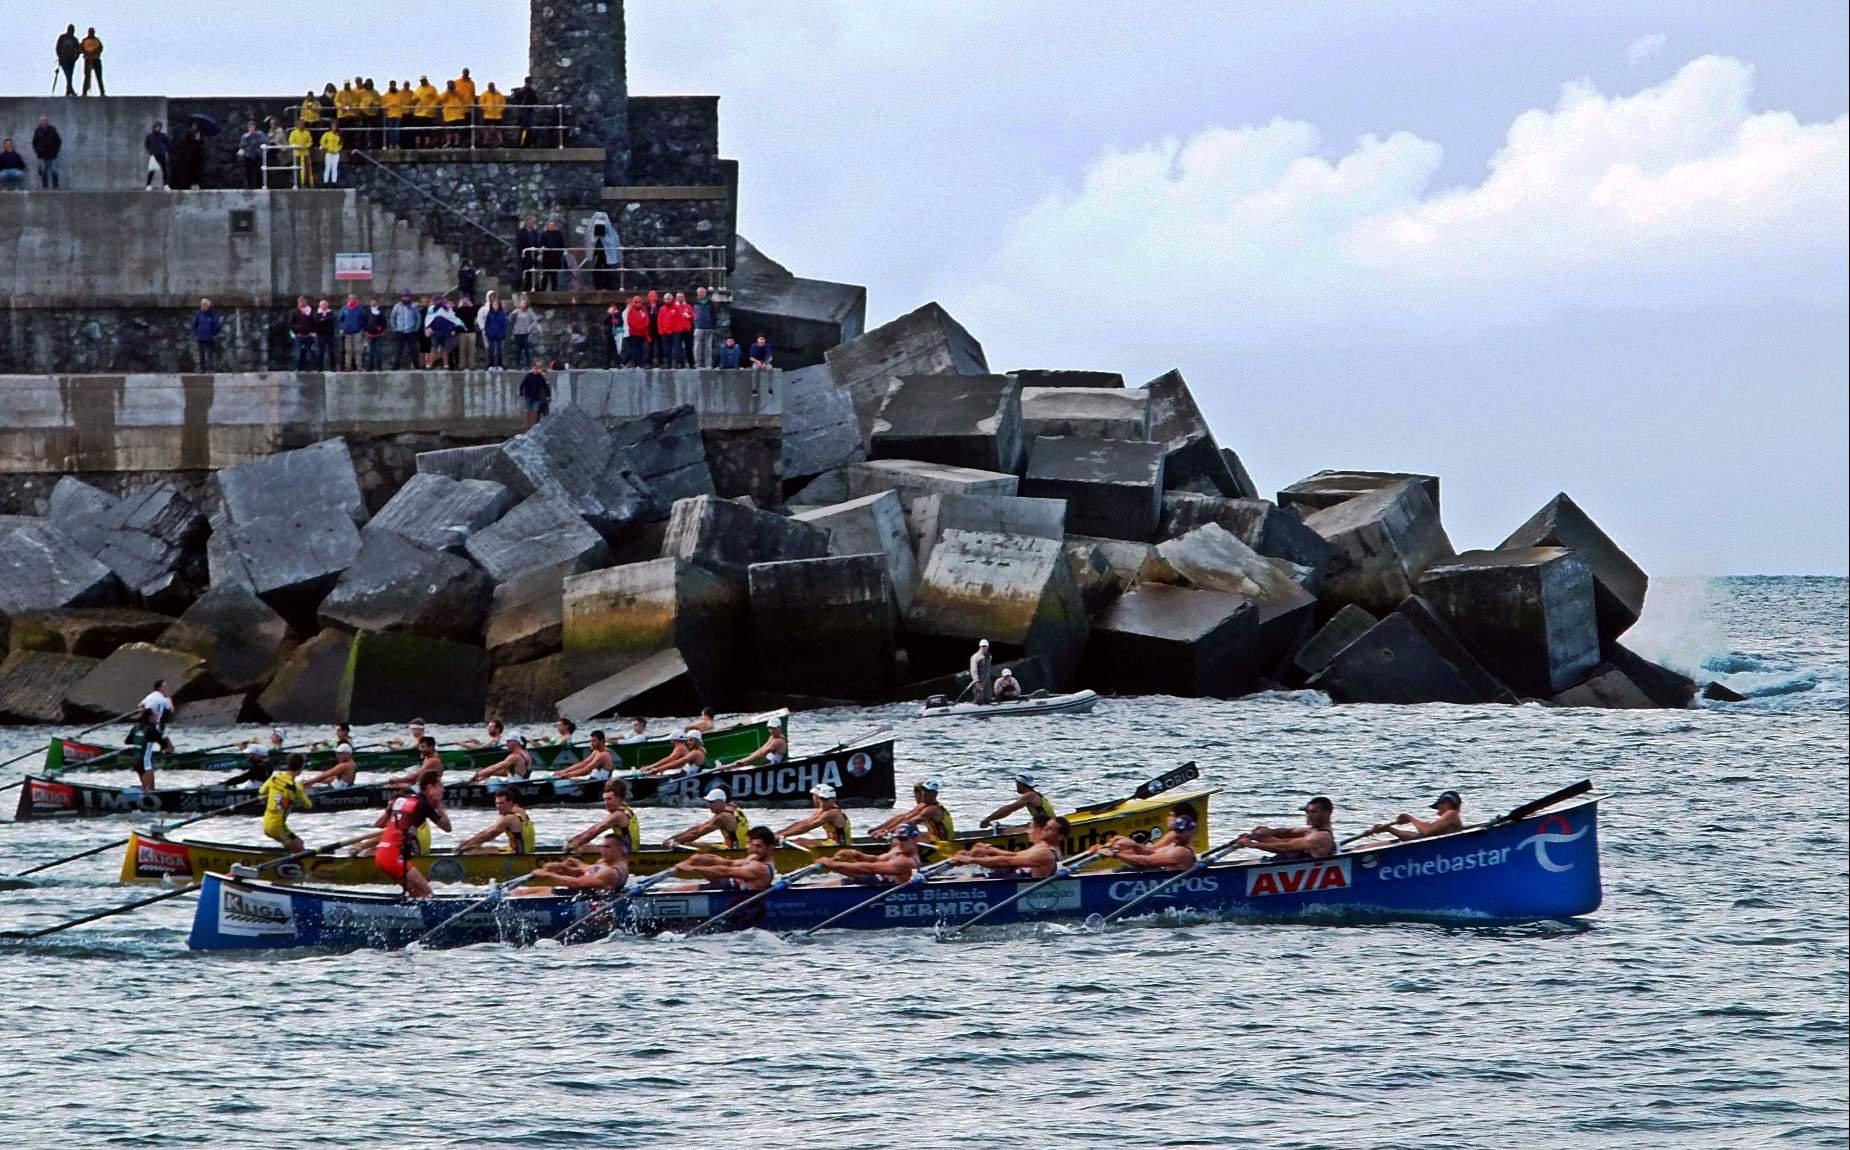 three canoe teams in the sea racing